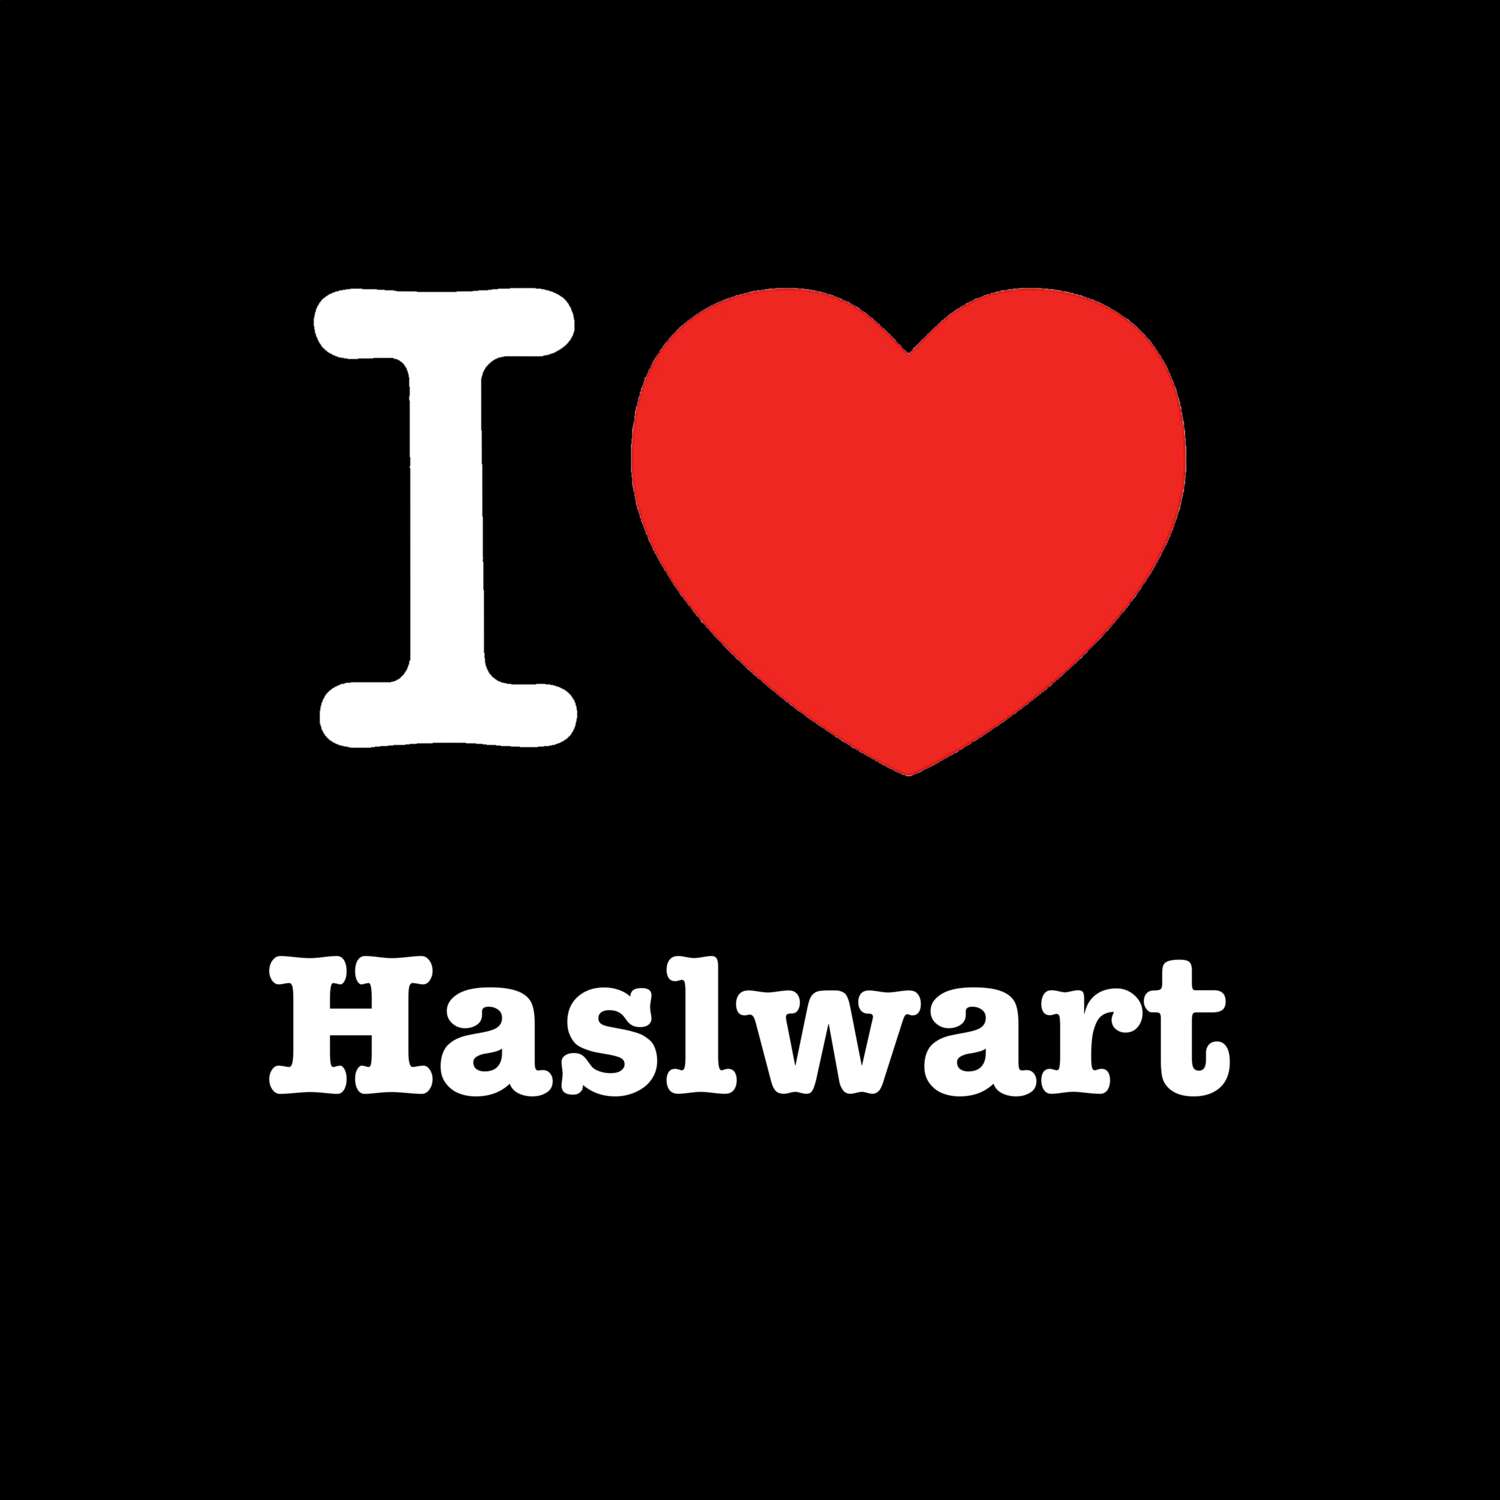 Haslwart T-Shirt »I love«